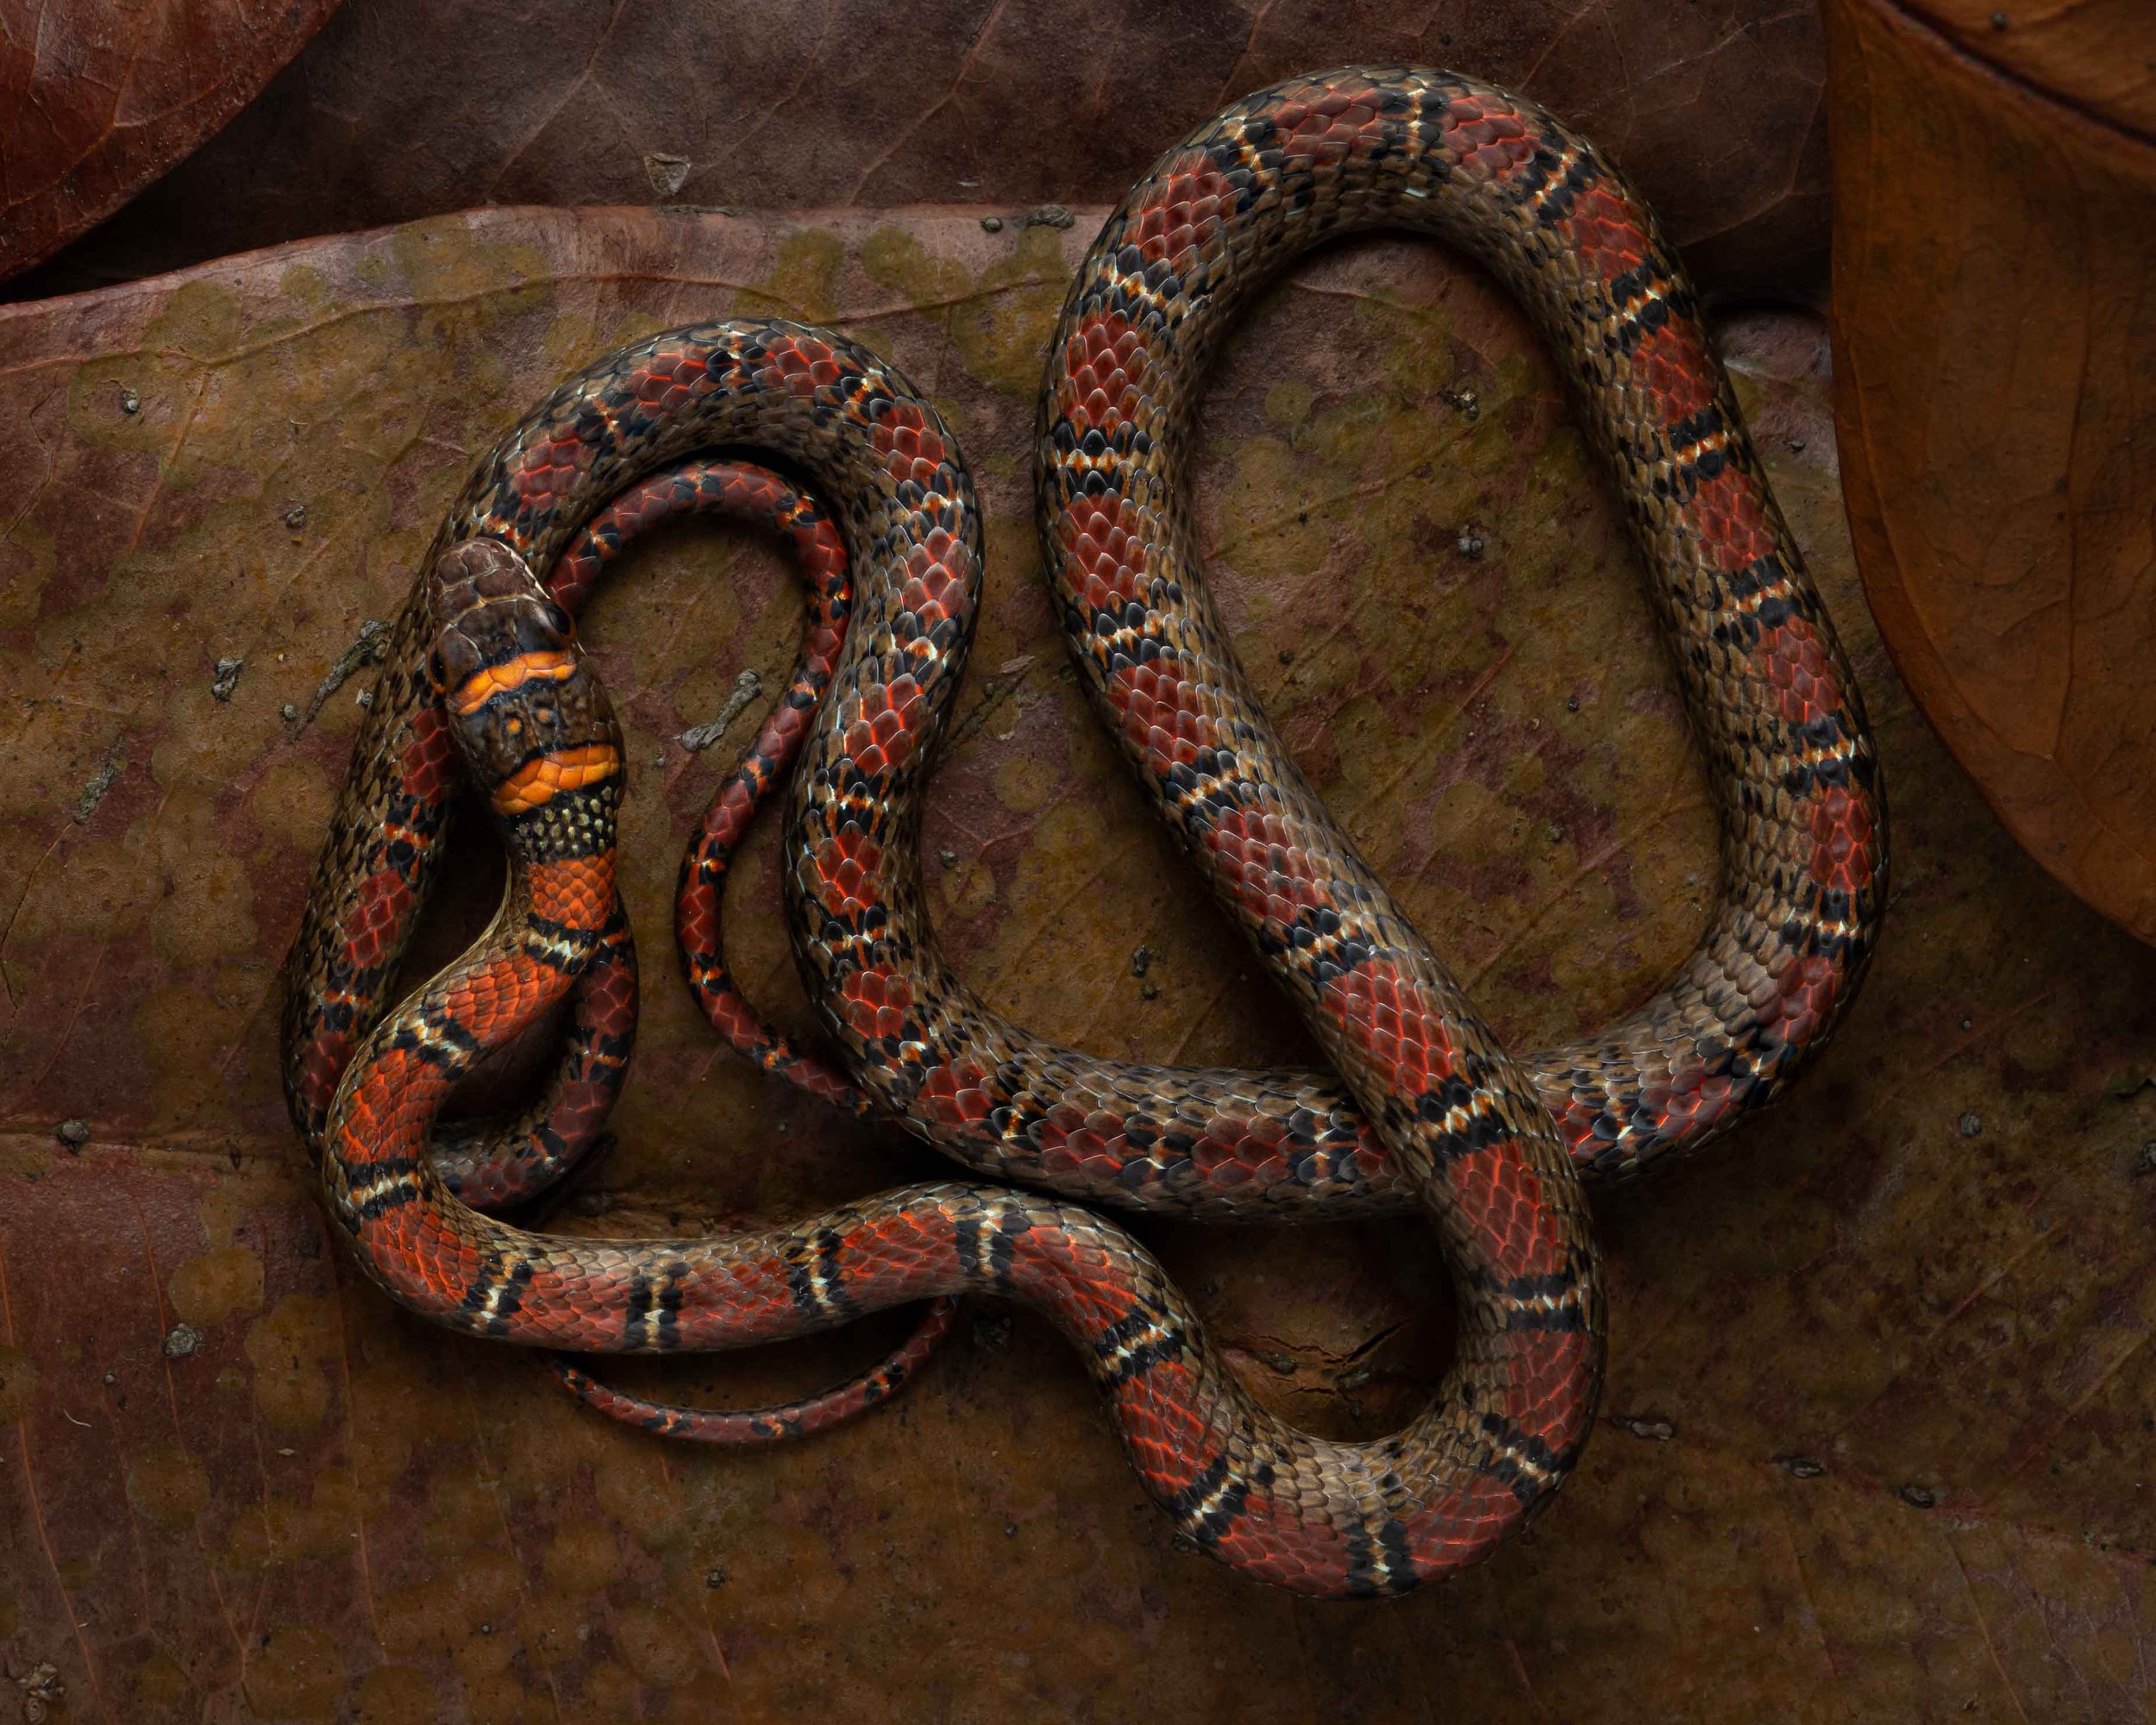 Twin-barred Tree Snake - Banded Flying Snake - Chrysopelea pelias